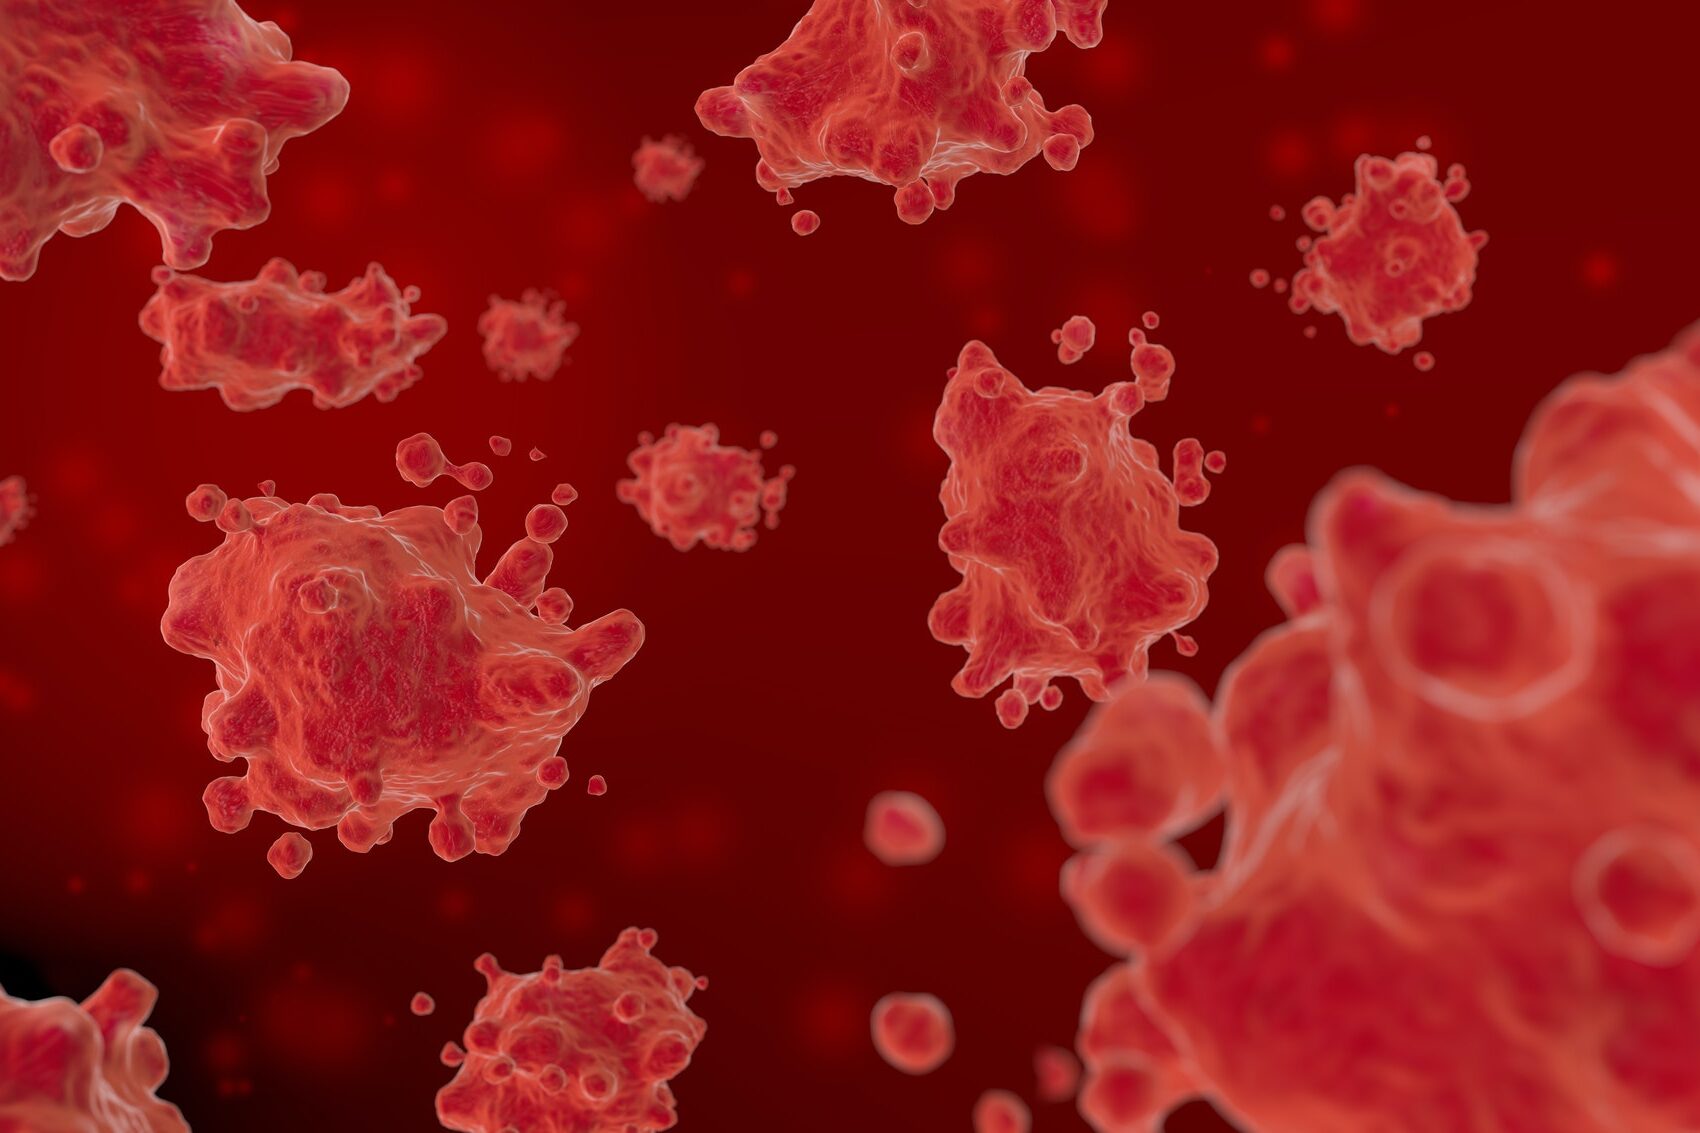 red virus cells, 3d illustration